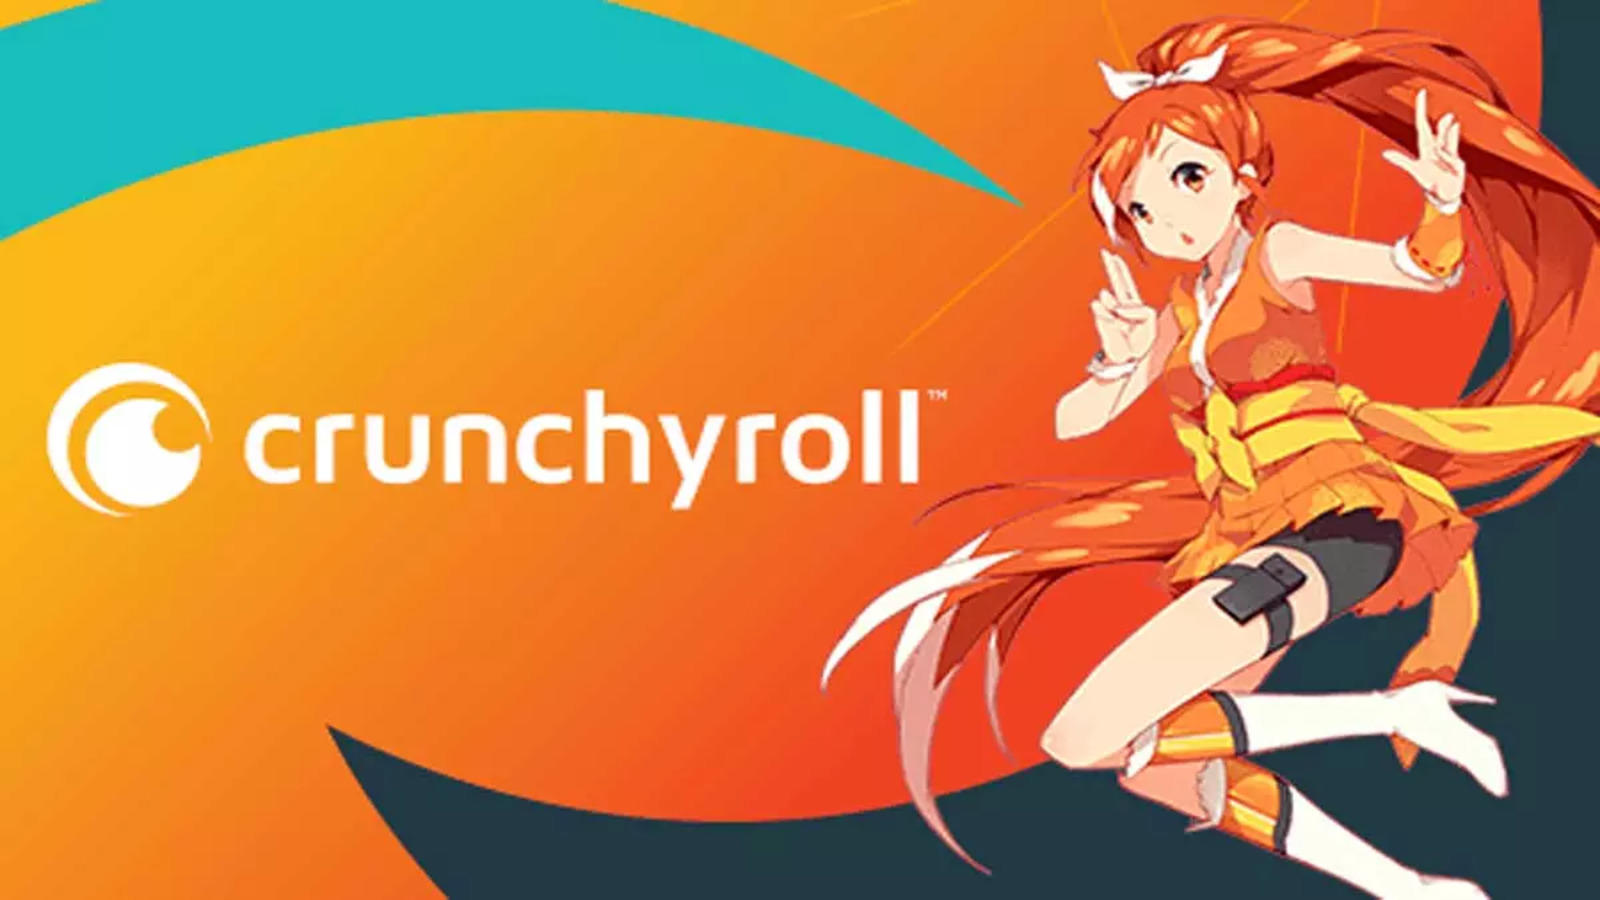 Crunchyroll.pt - Is that a Brasil reference